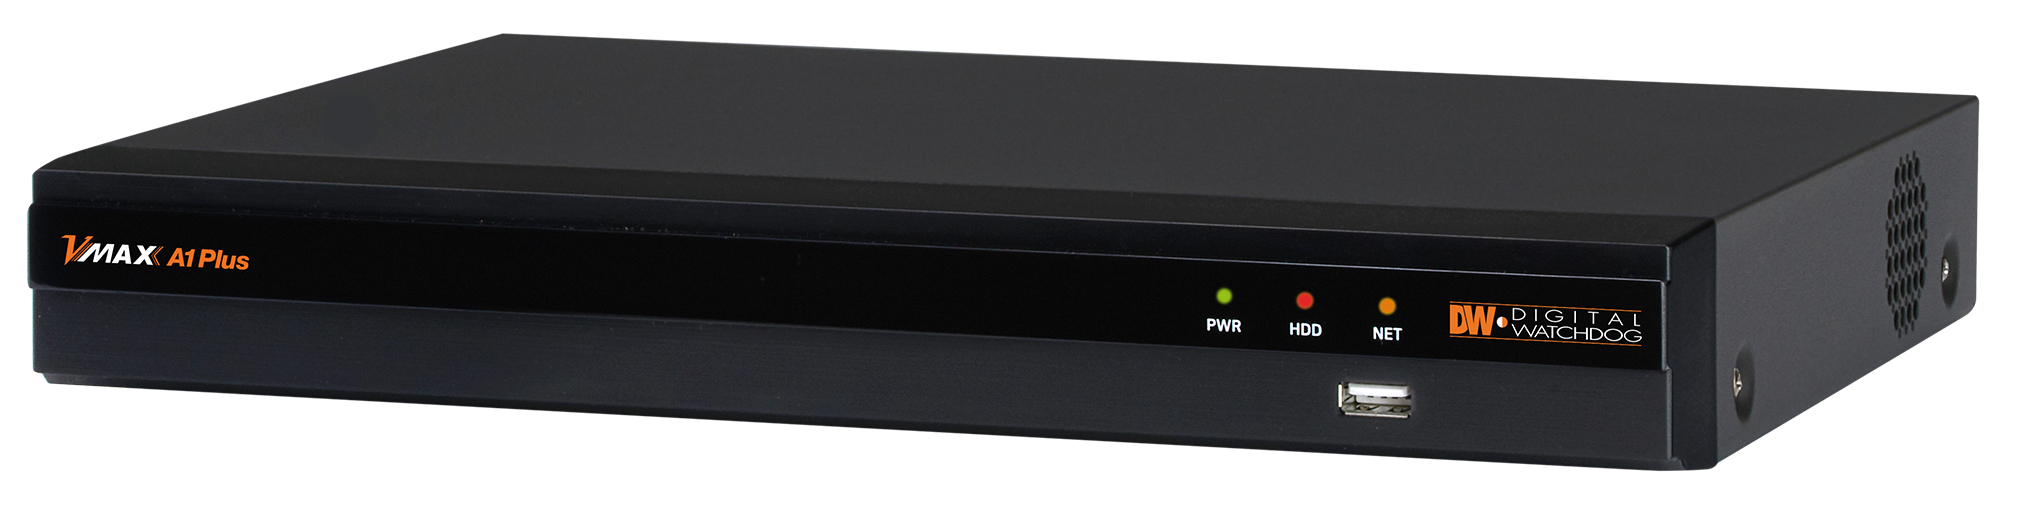 Digital Watchdog DW-VA1P8 UHDoC - DVR 8ch 8 Channel Universal HD Over Coax DVR